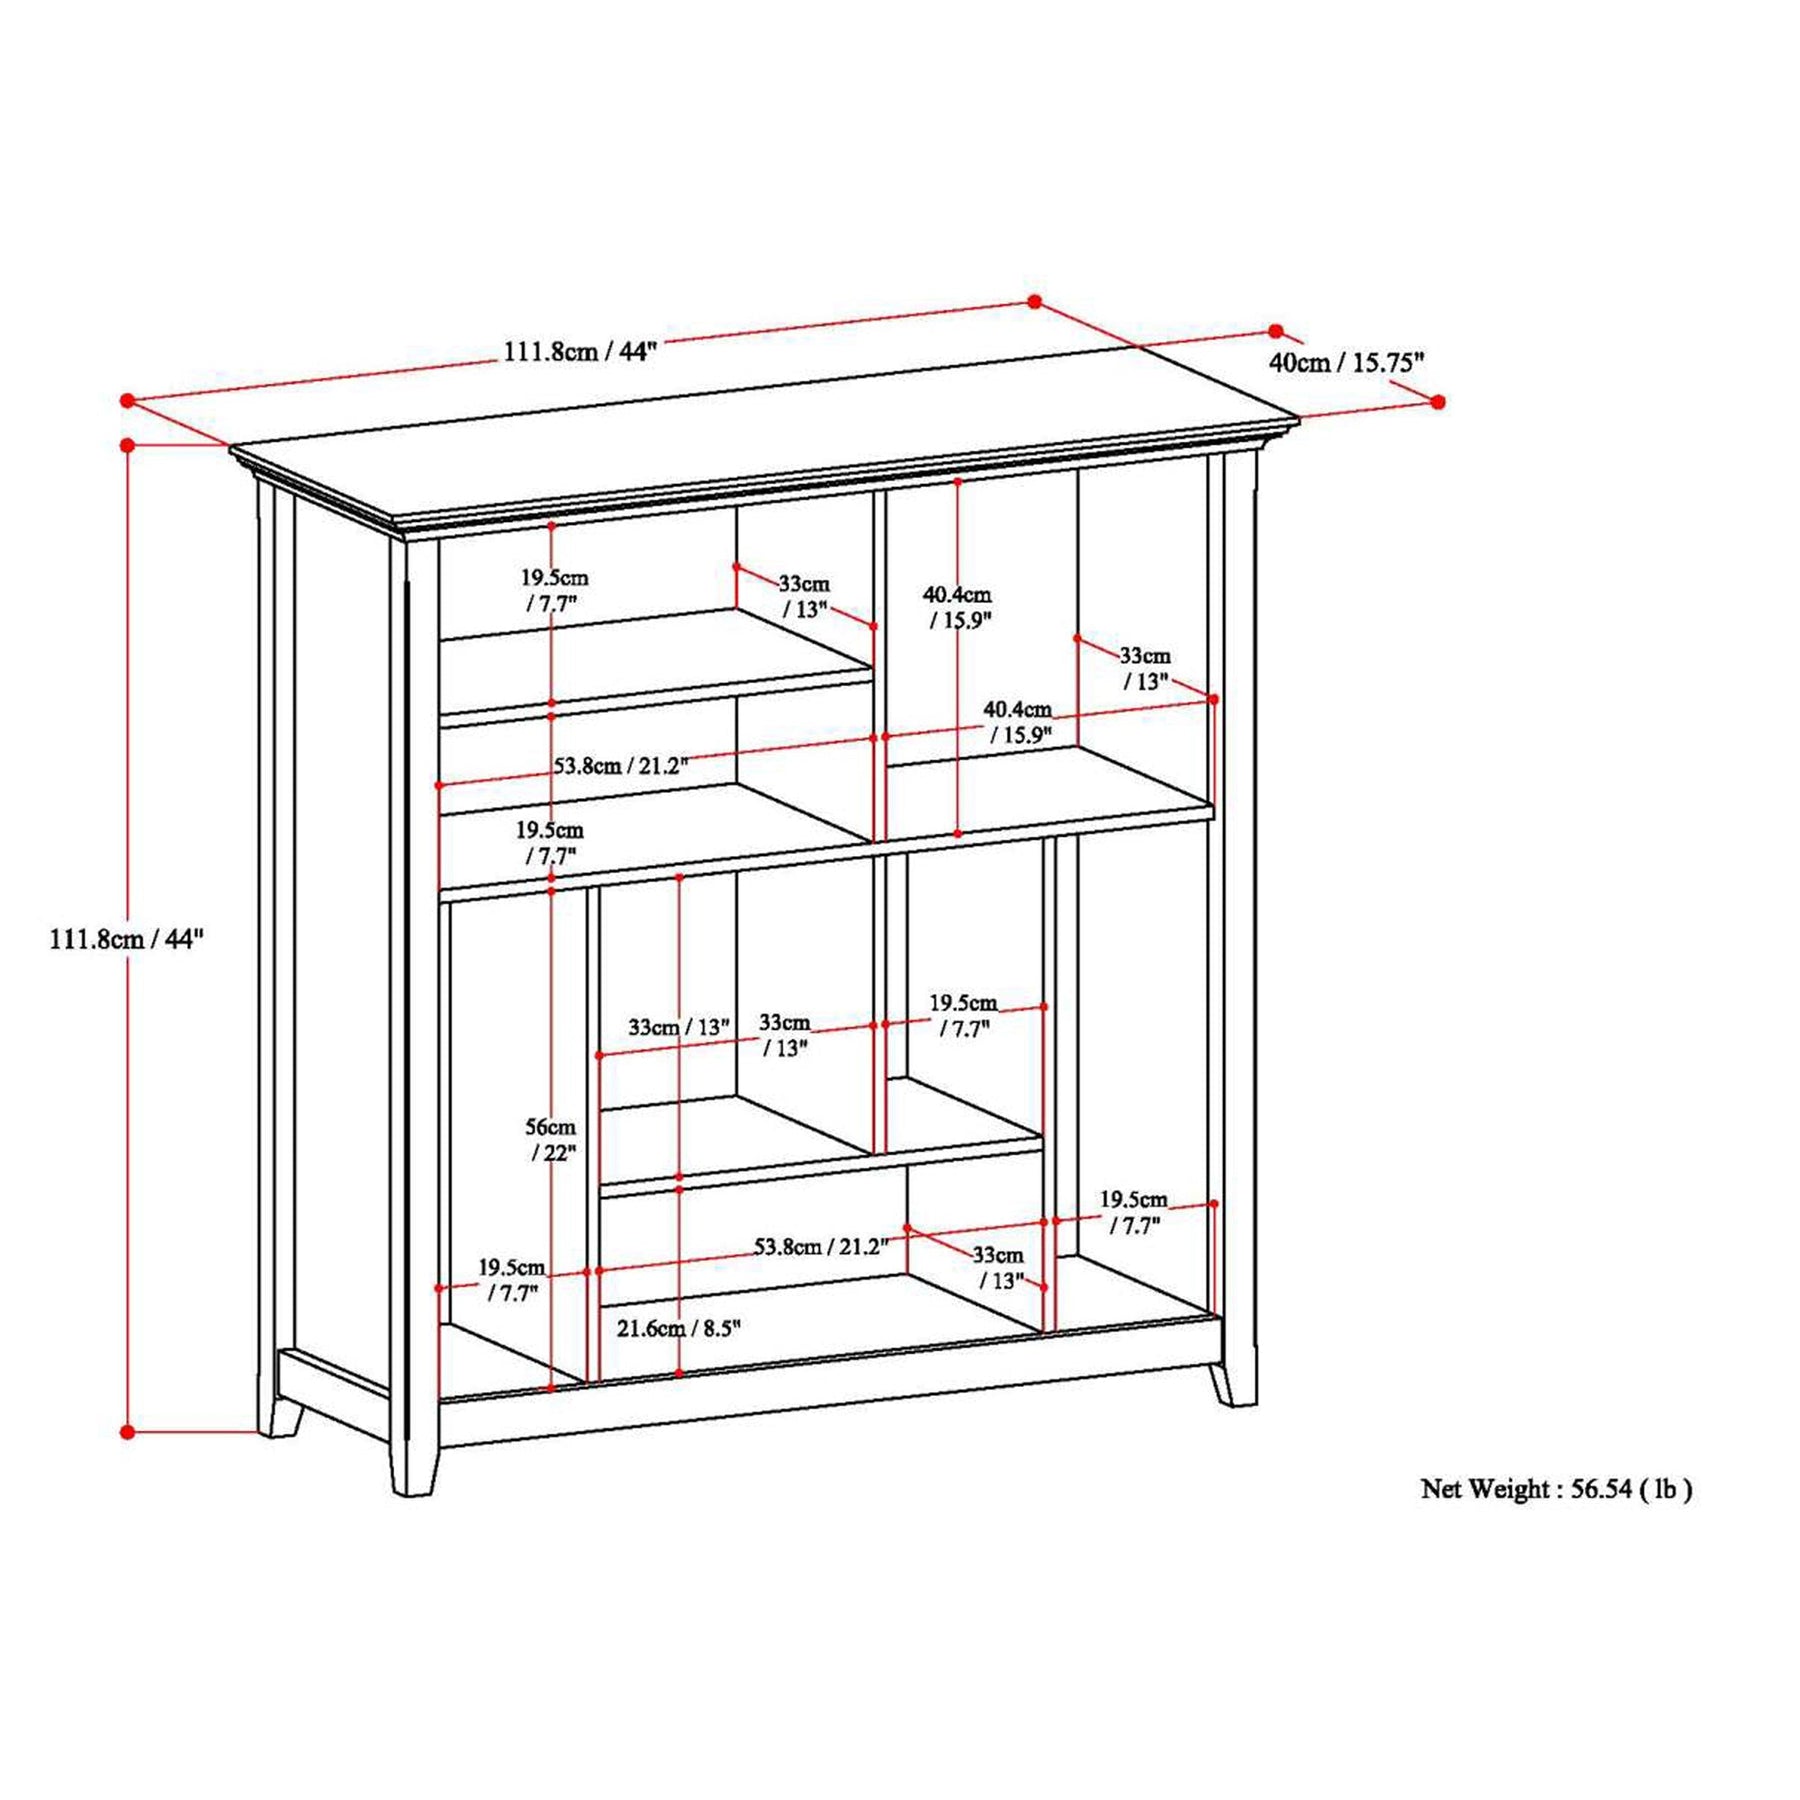 White | Amherst Multi-Cube Bookcase & Storage Unit